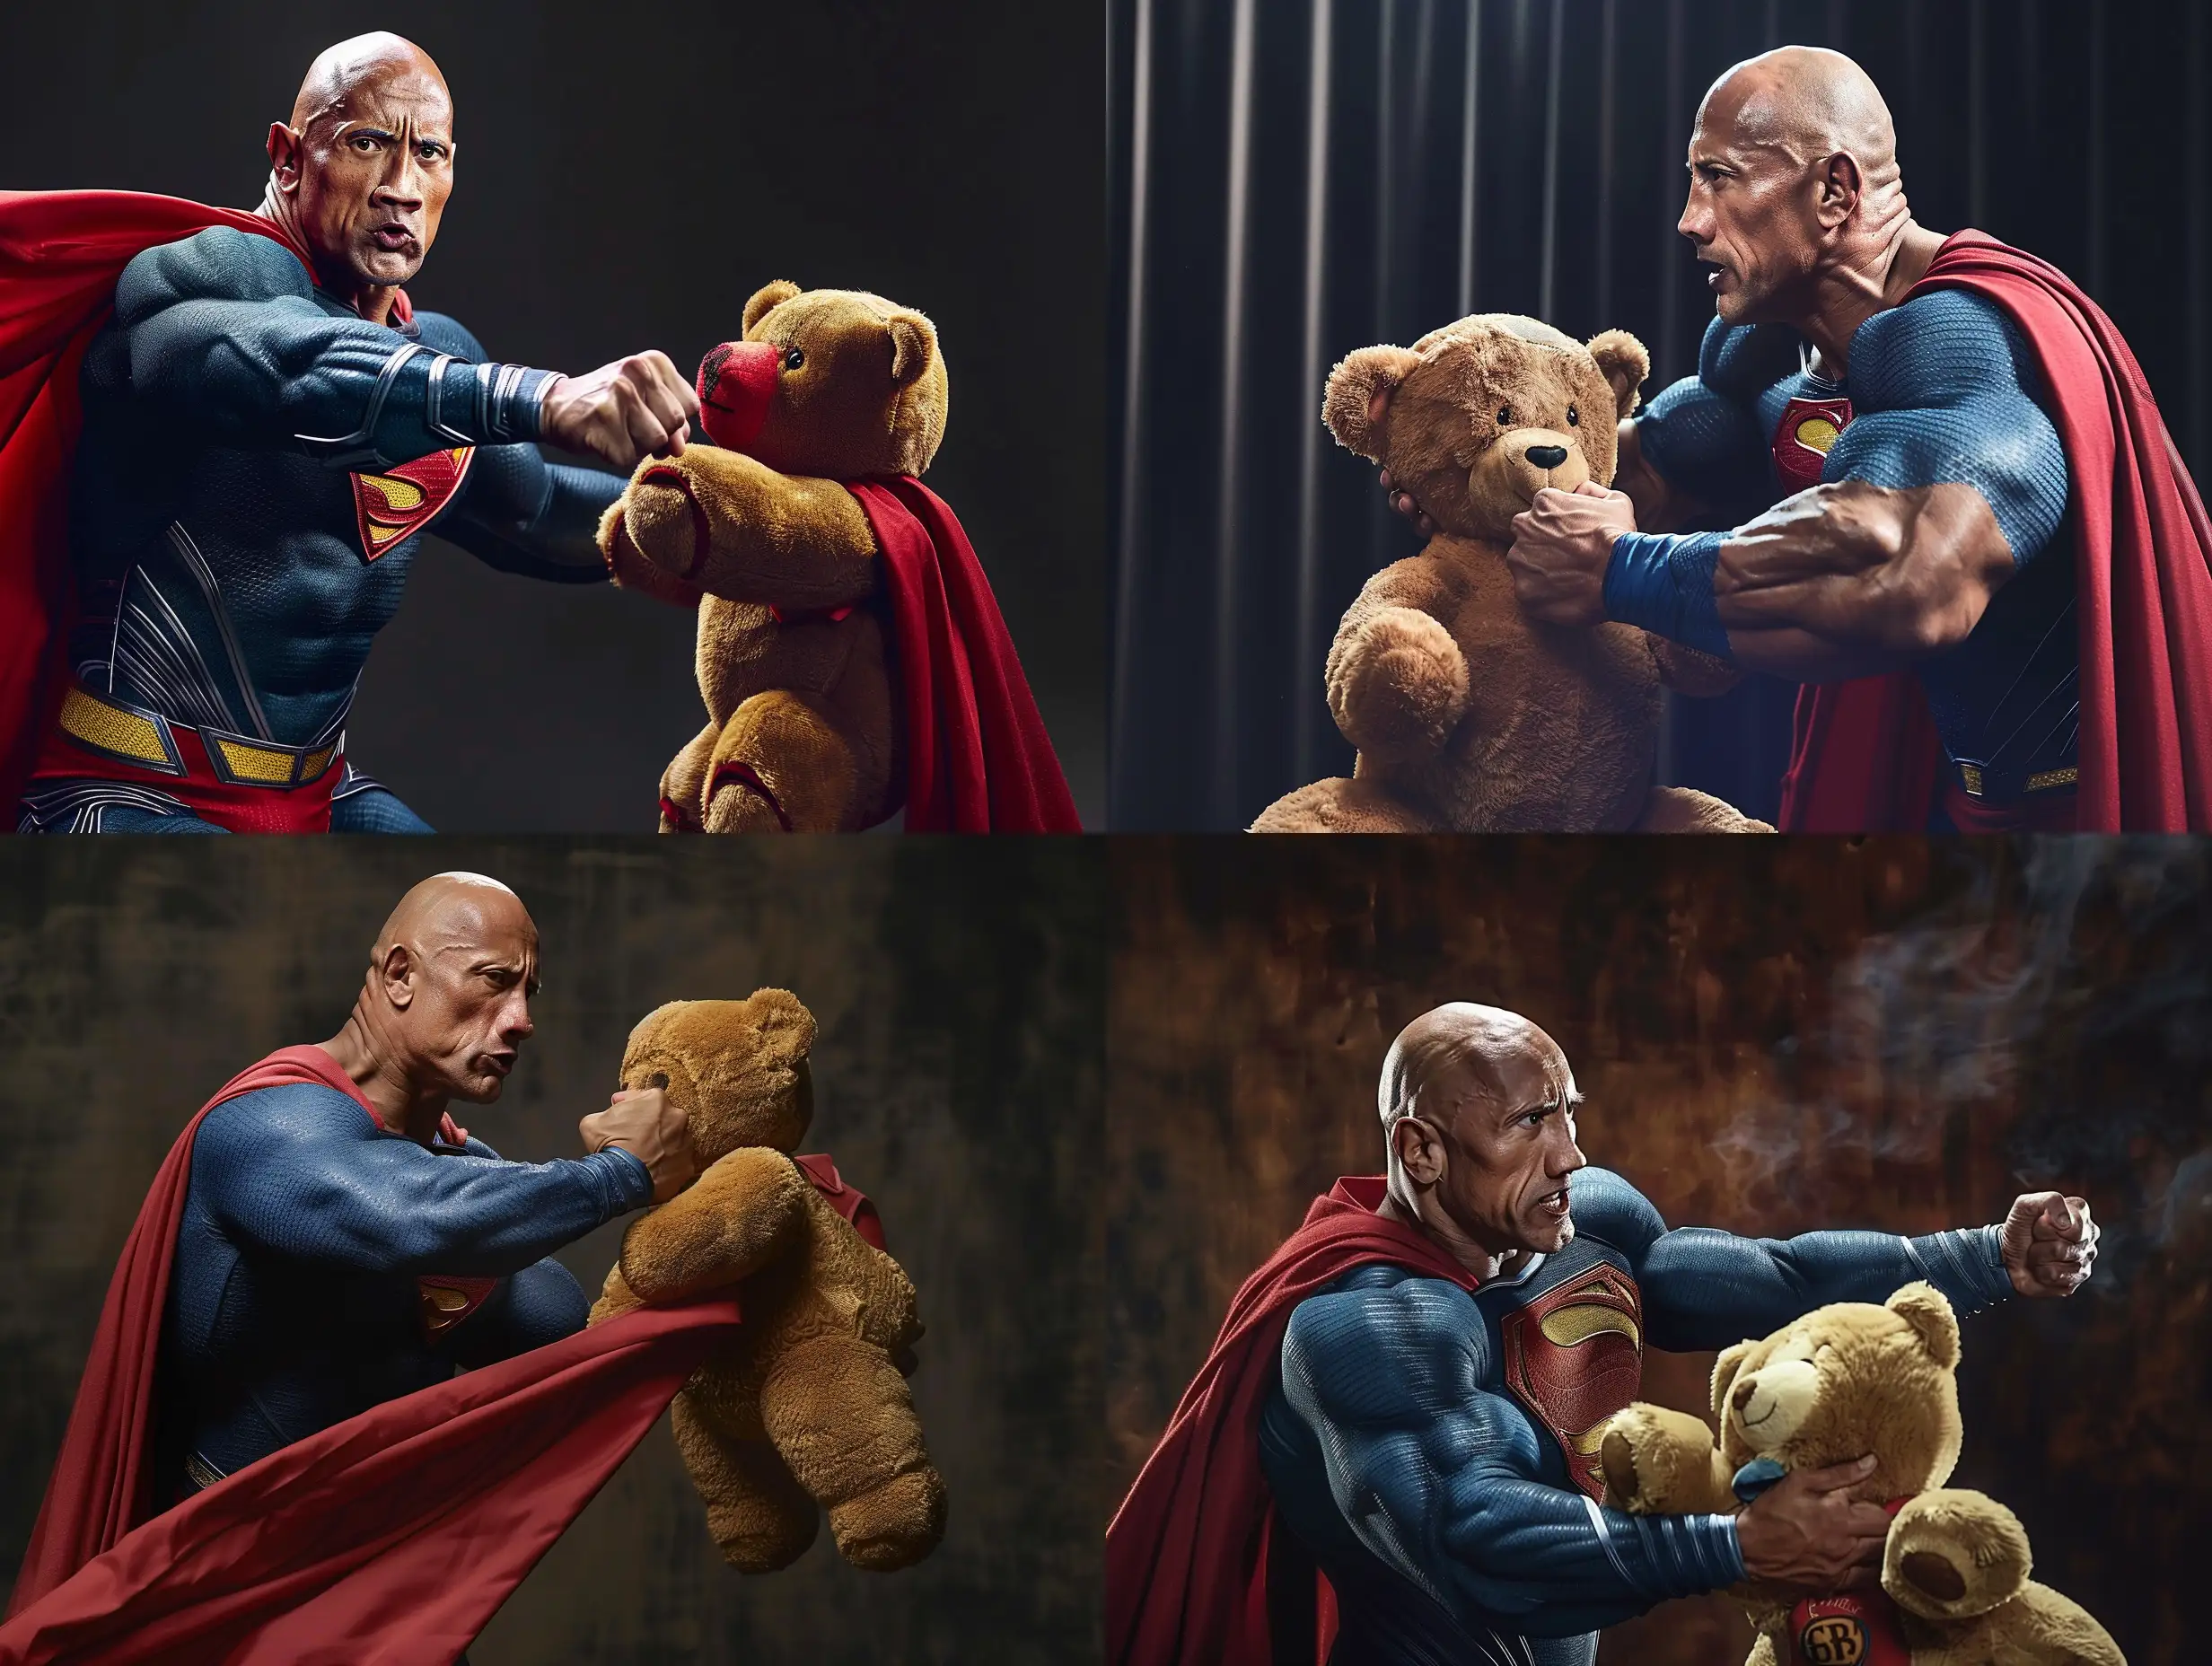 Dwayne The Rock Johnson dressed as superman punching a teddy bear